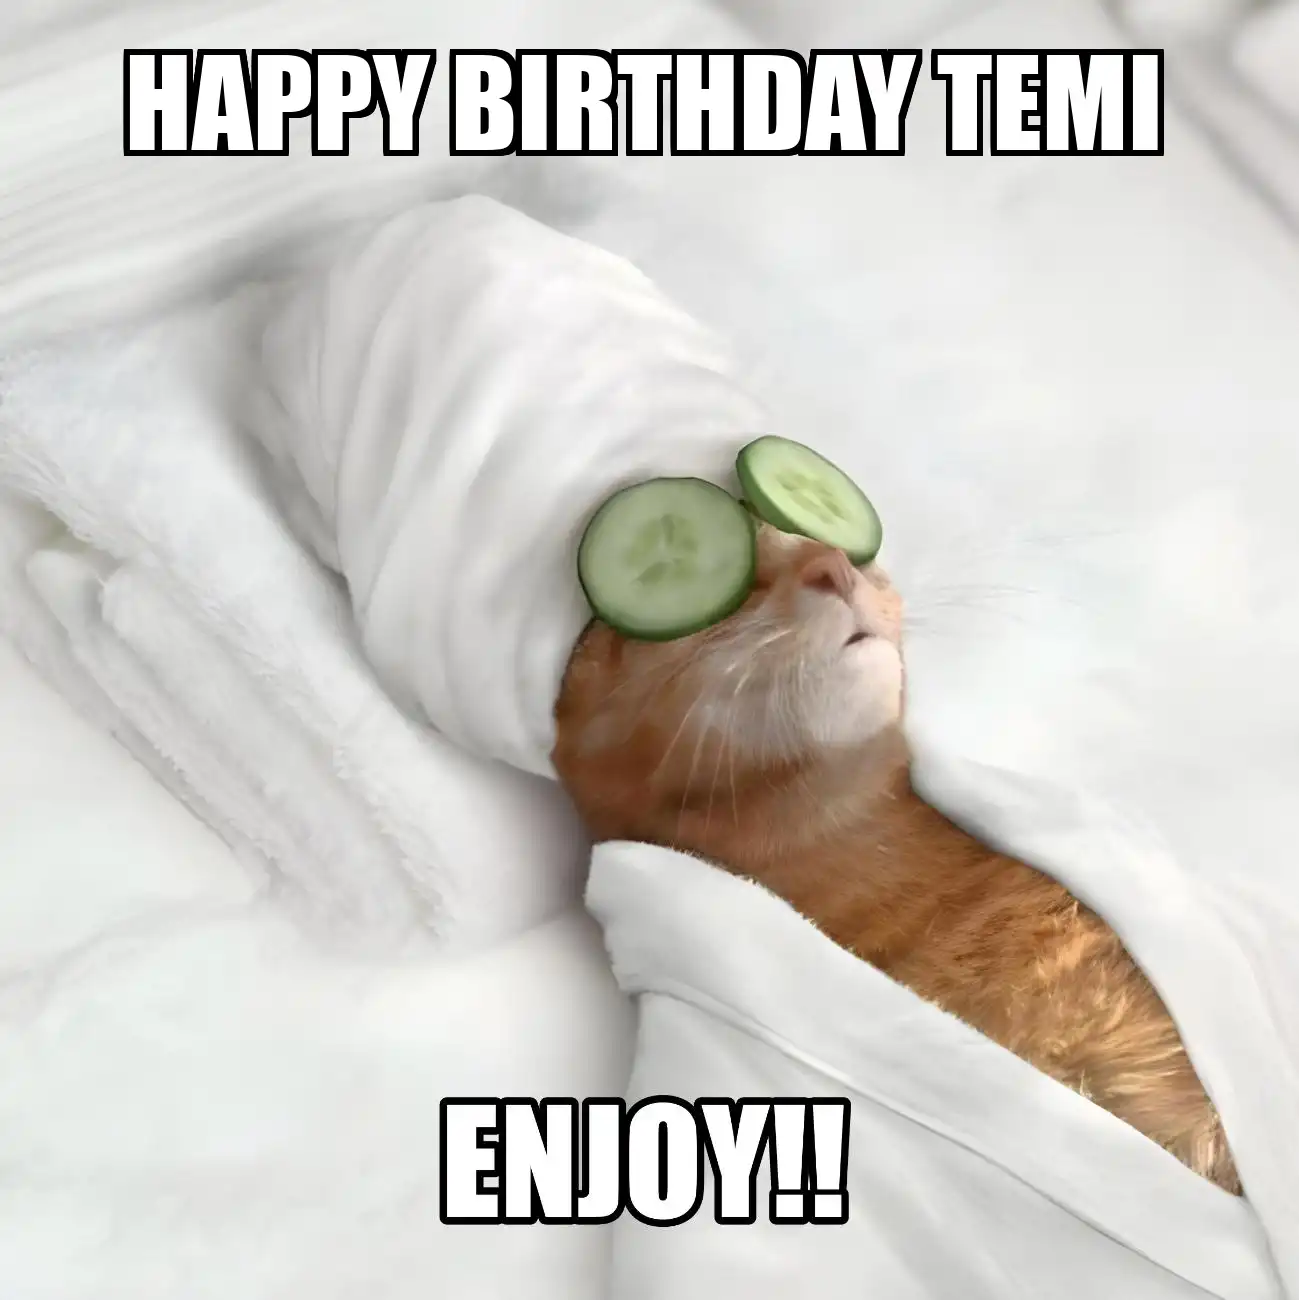 Happy Birthday Temi Enjoy Cat Meme